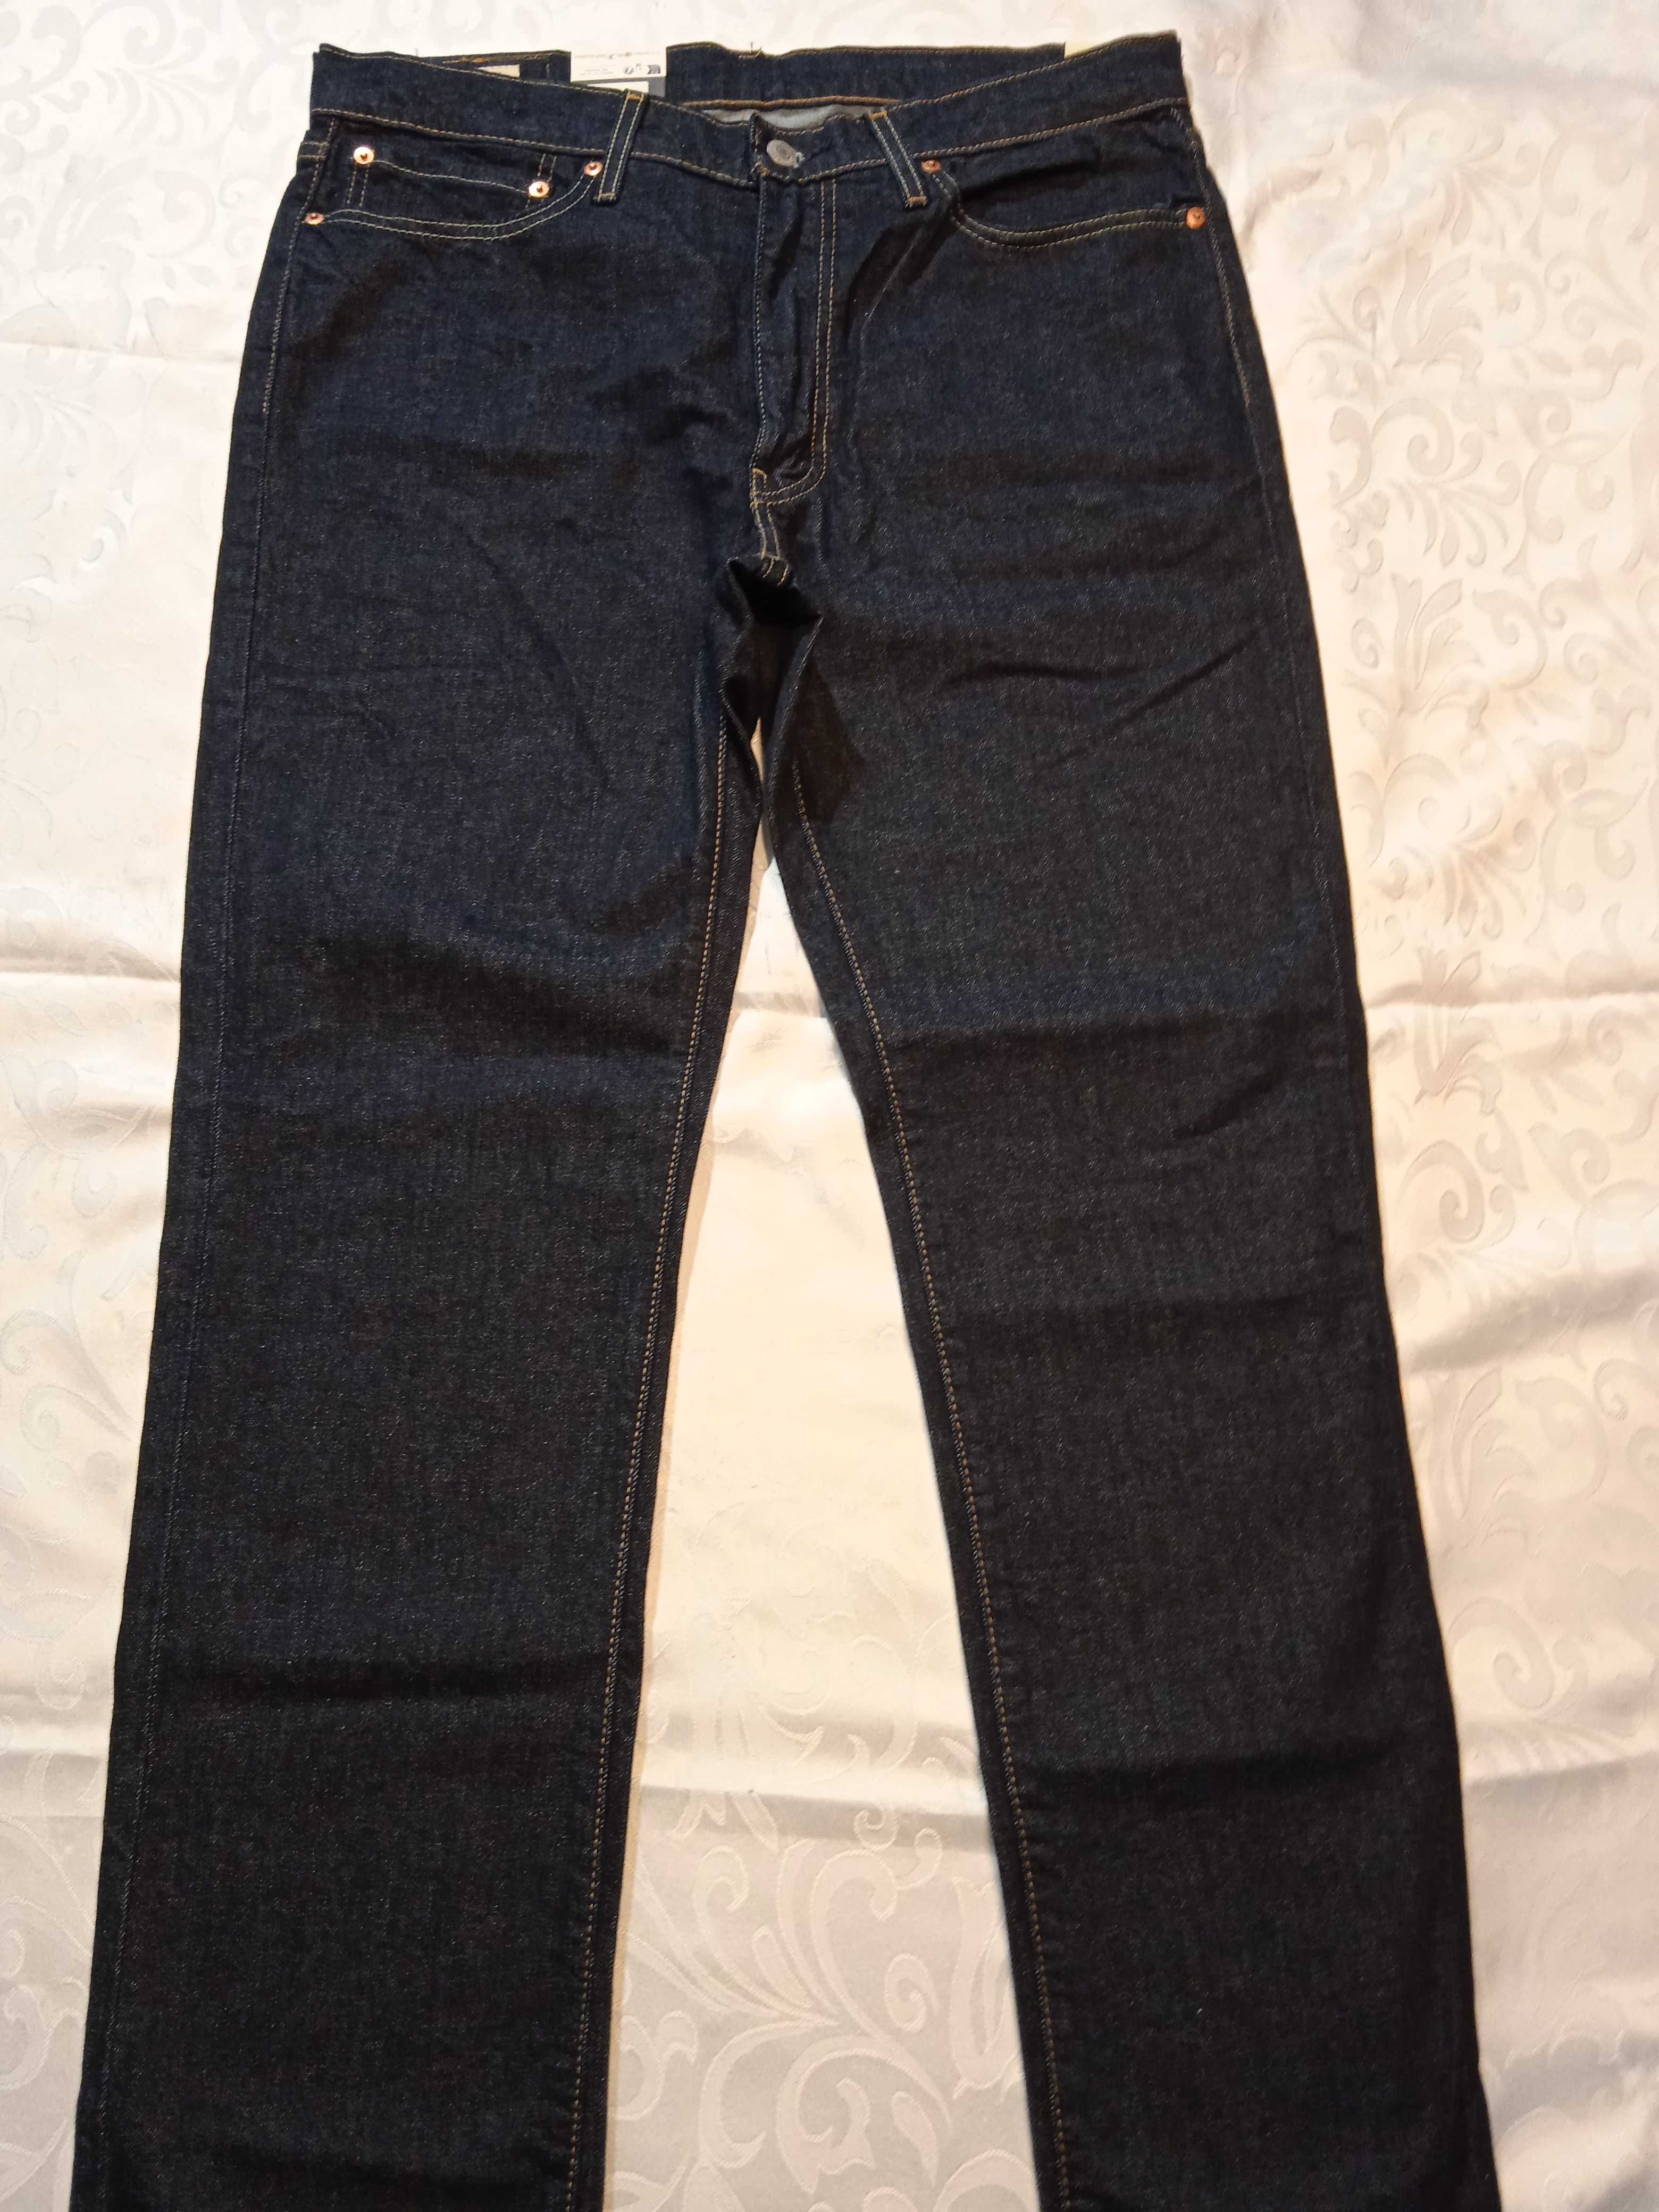 Levis 511 Slim Premium Nowe spodnie jeansy W36 L32 + Gratis! Sold!